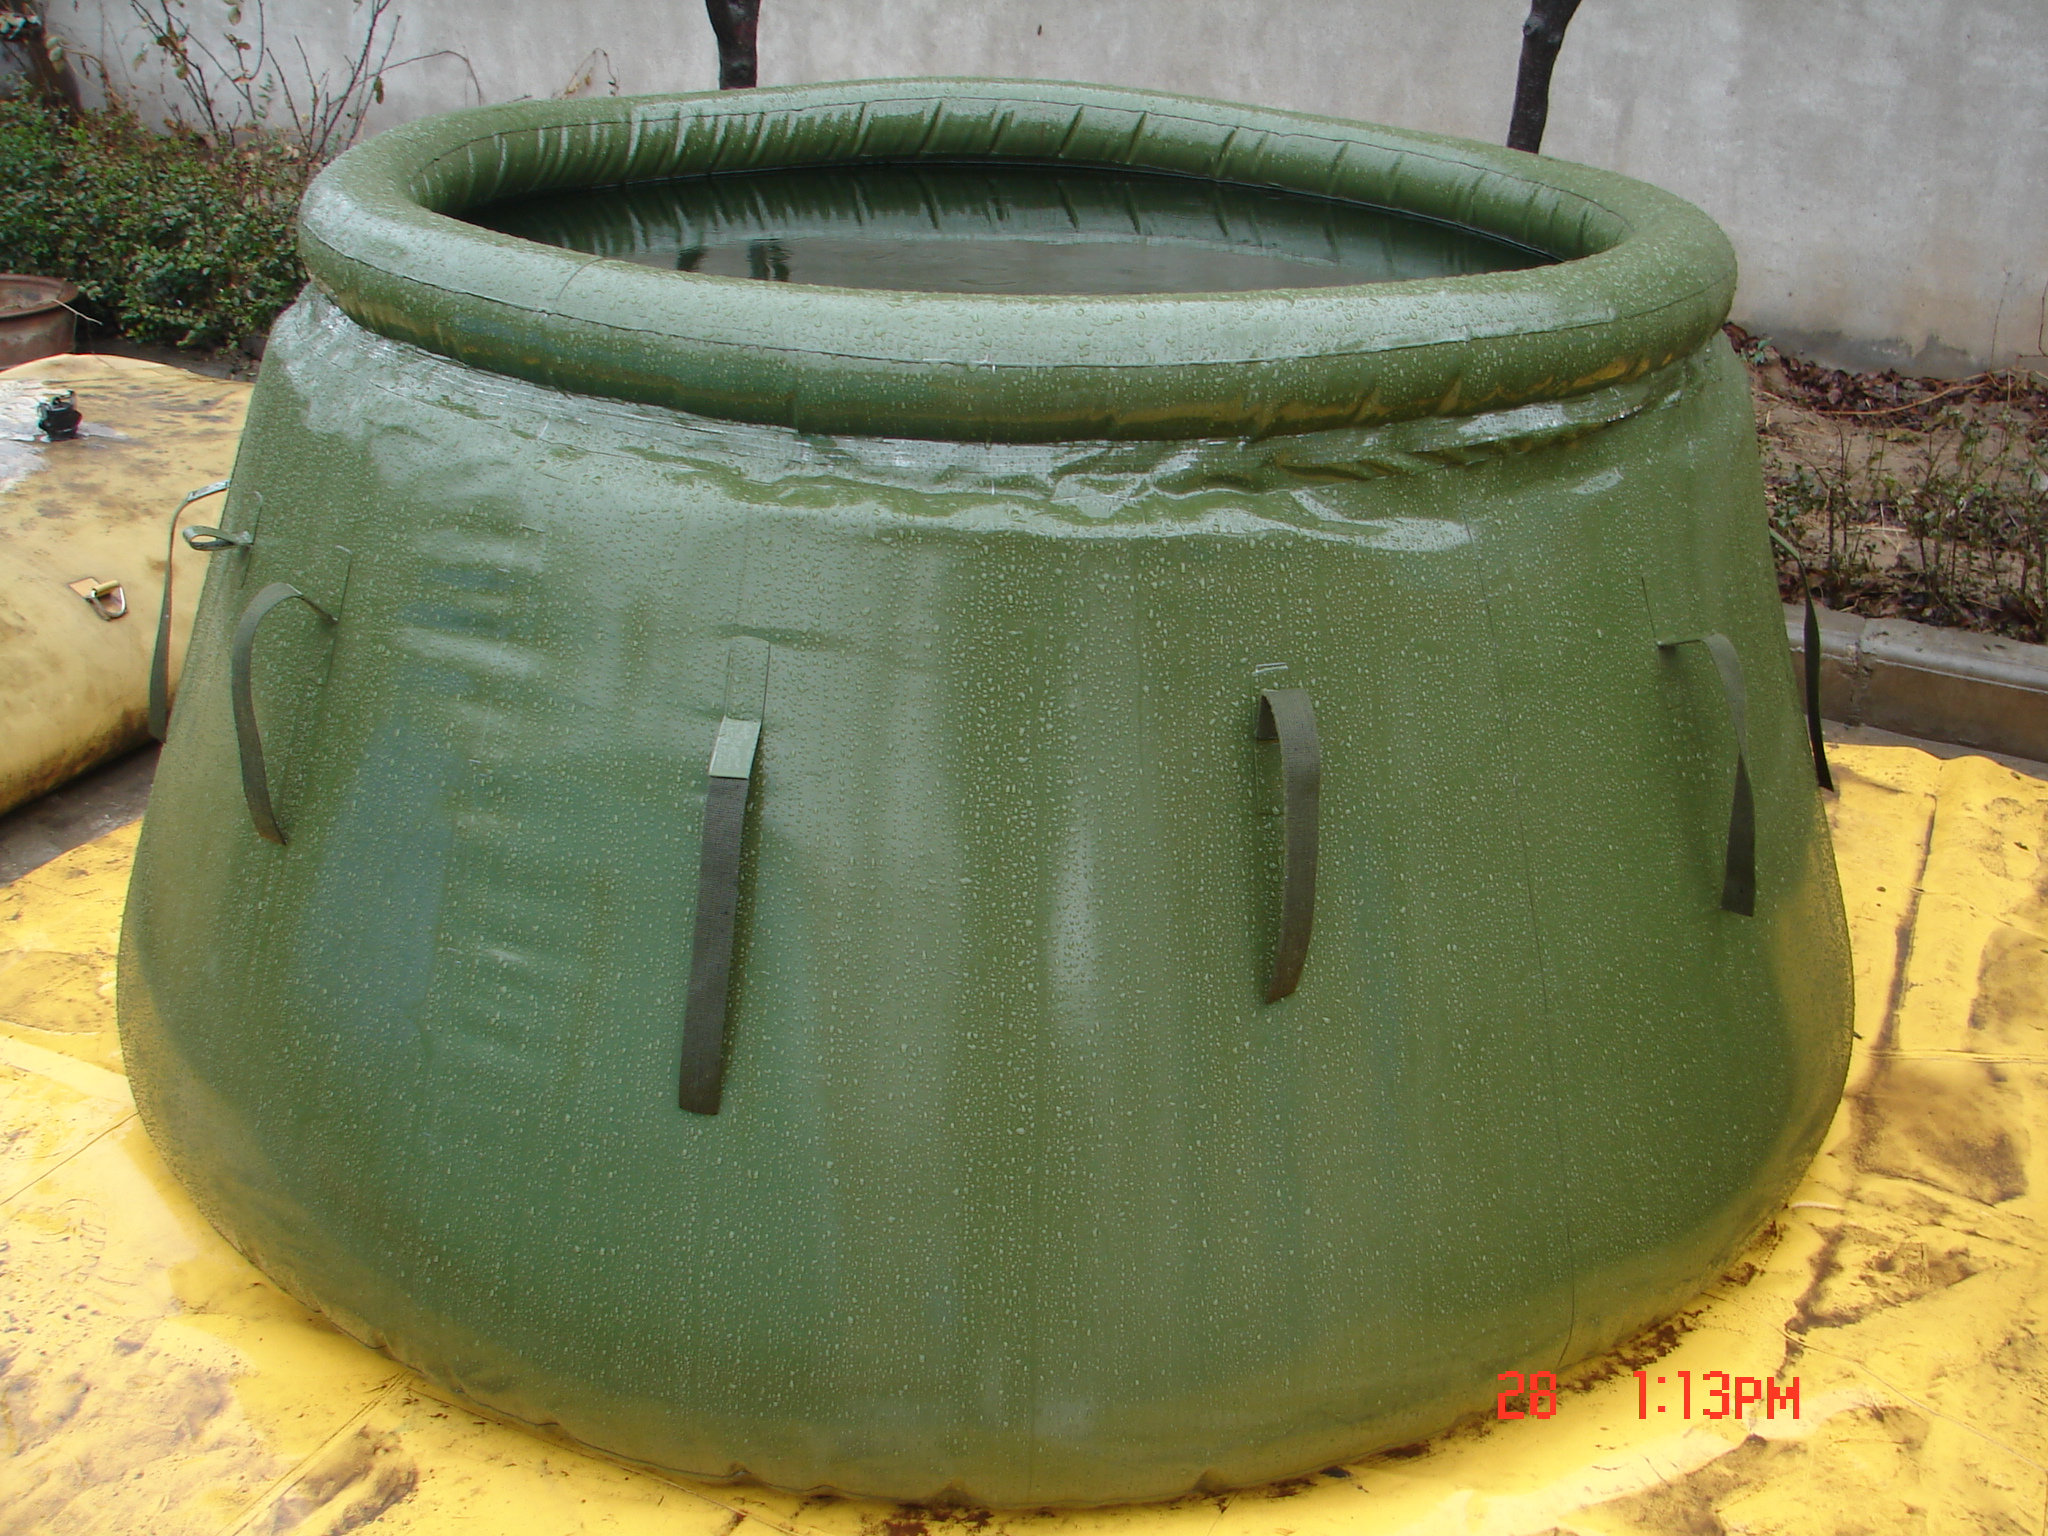 Flodable Onion Shape PVC Fire Fighting Water Storage Bladder Fire Water Tank Price